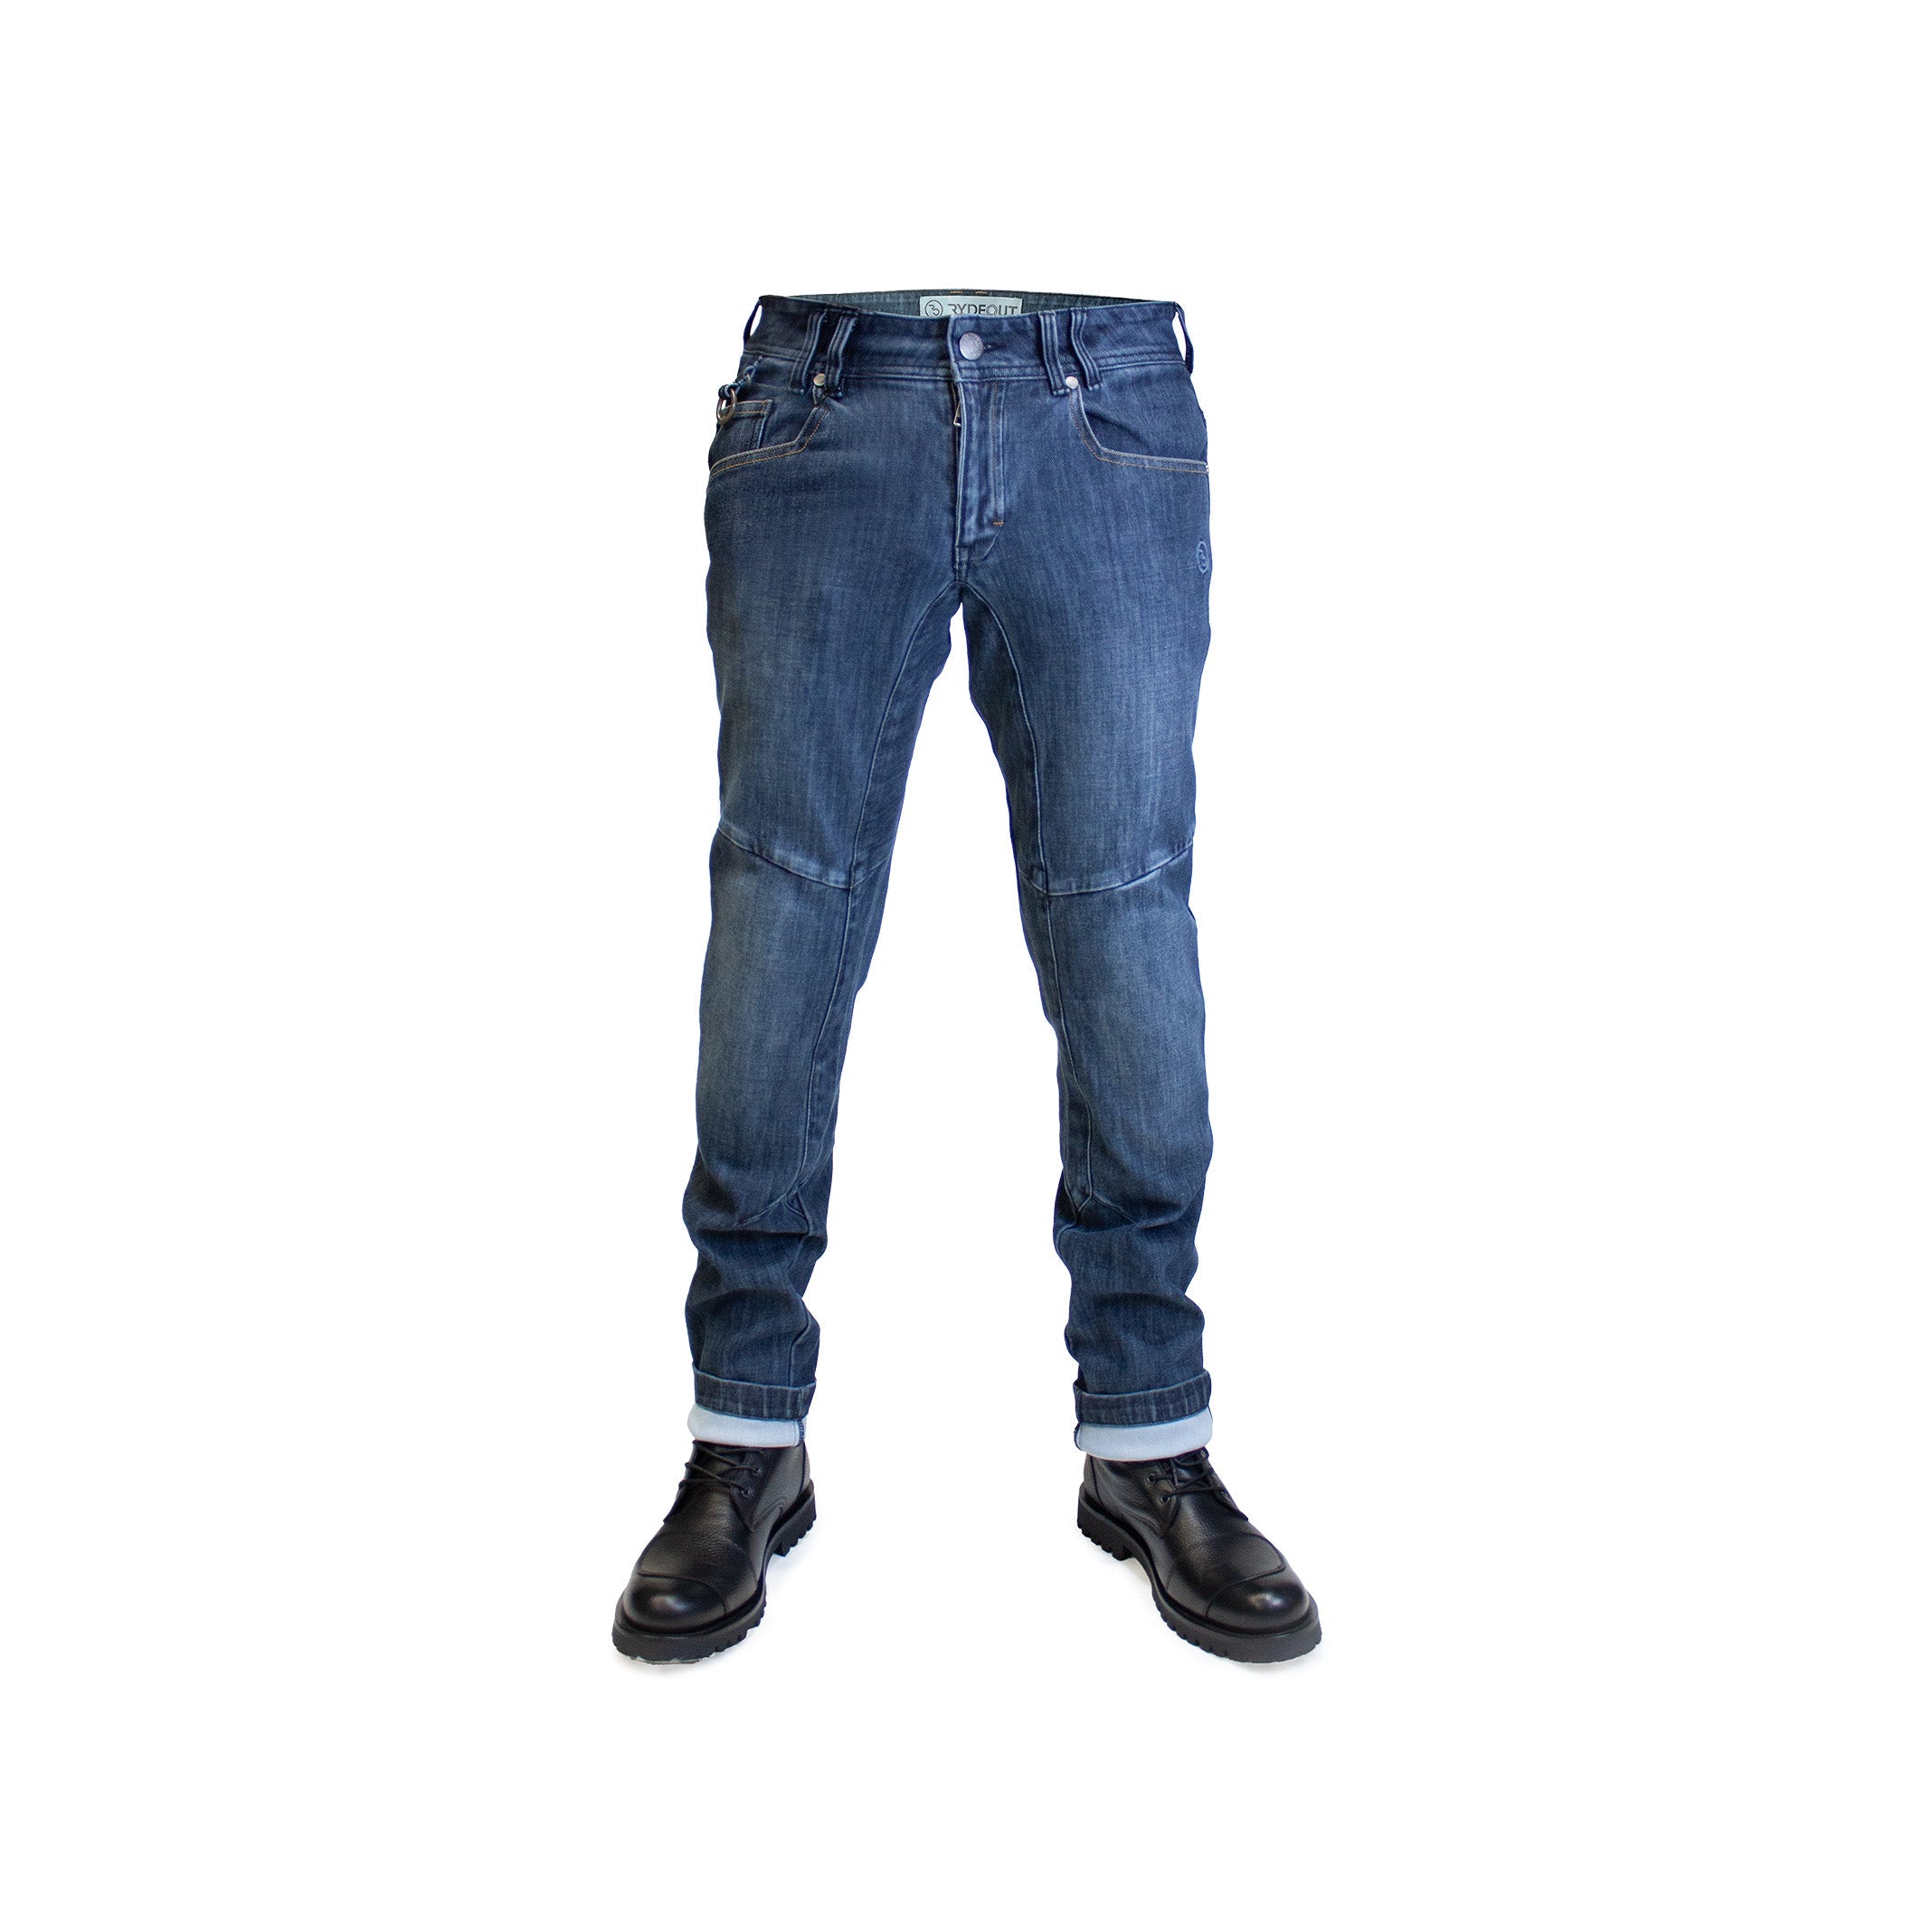 Rydeout Alpha Comfort Jeans, Length 33 - Blue